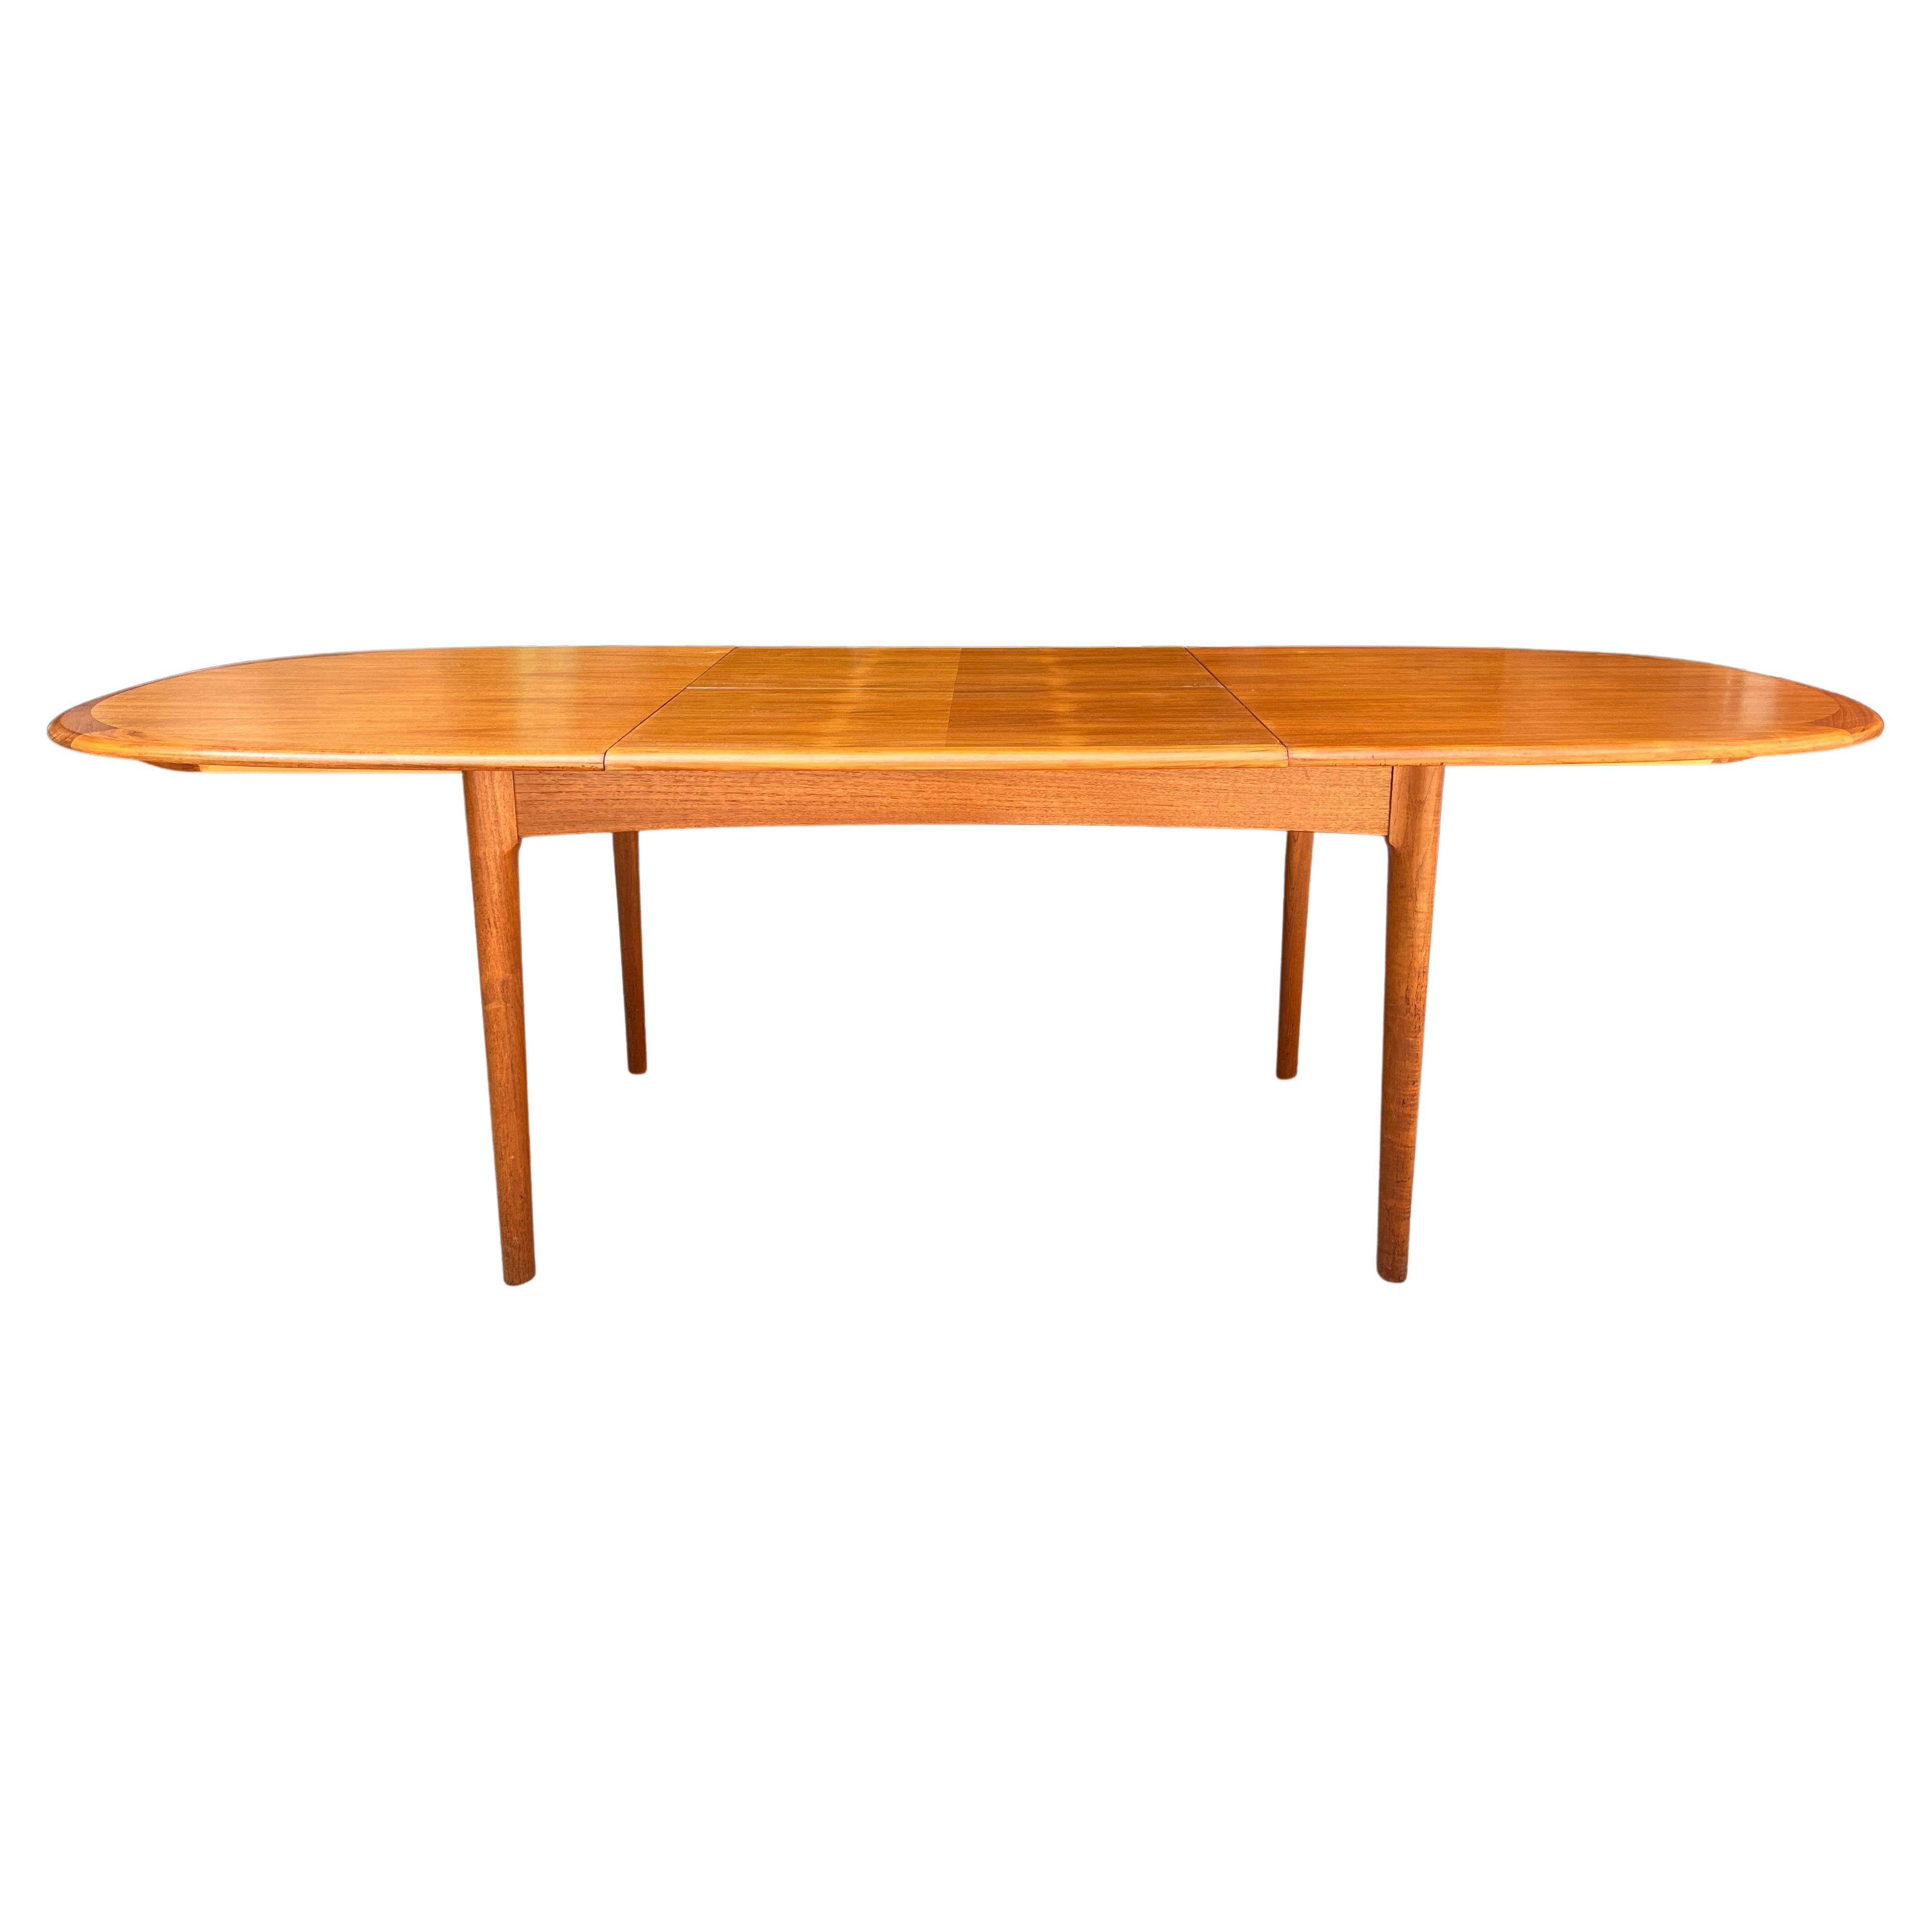 Danish Midcentury Elliptical Oval Teak Expandable Dining Table  For Sale